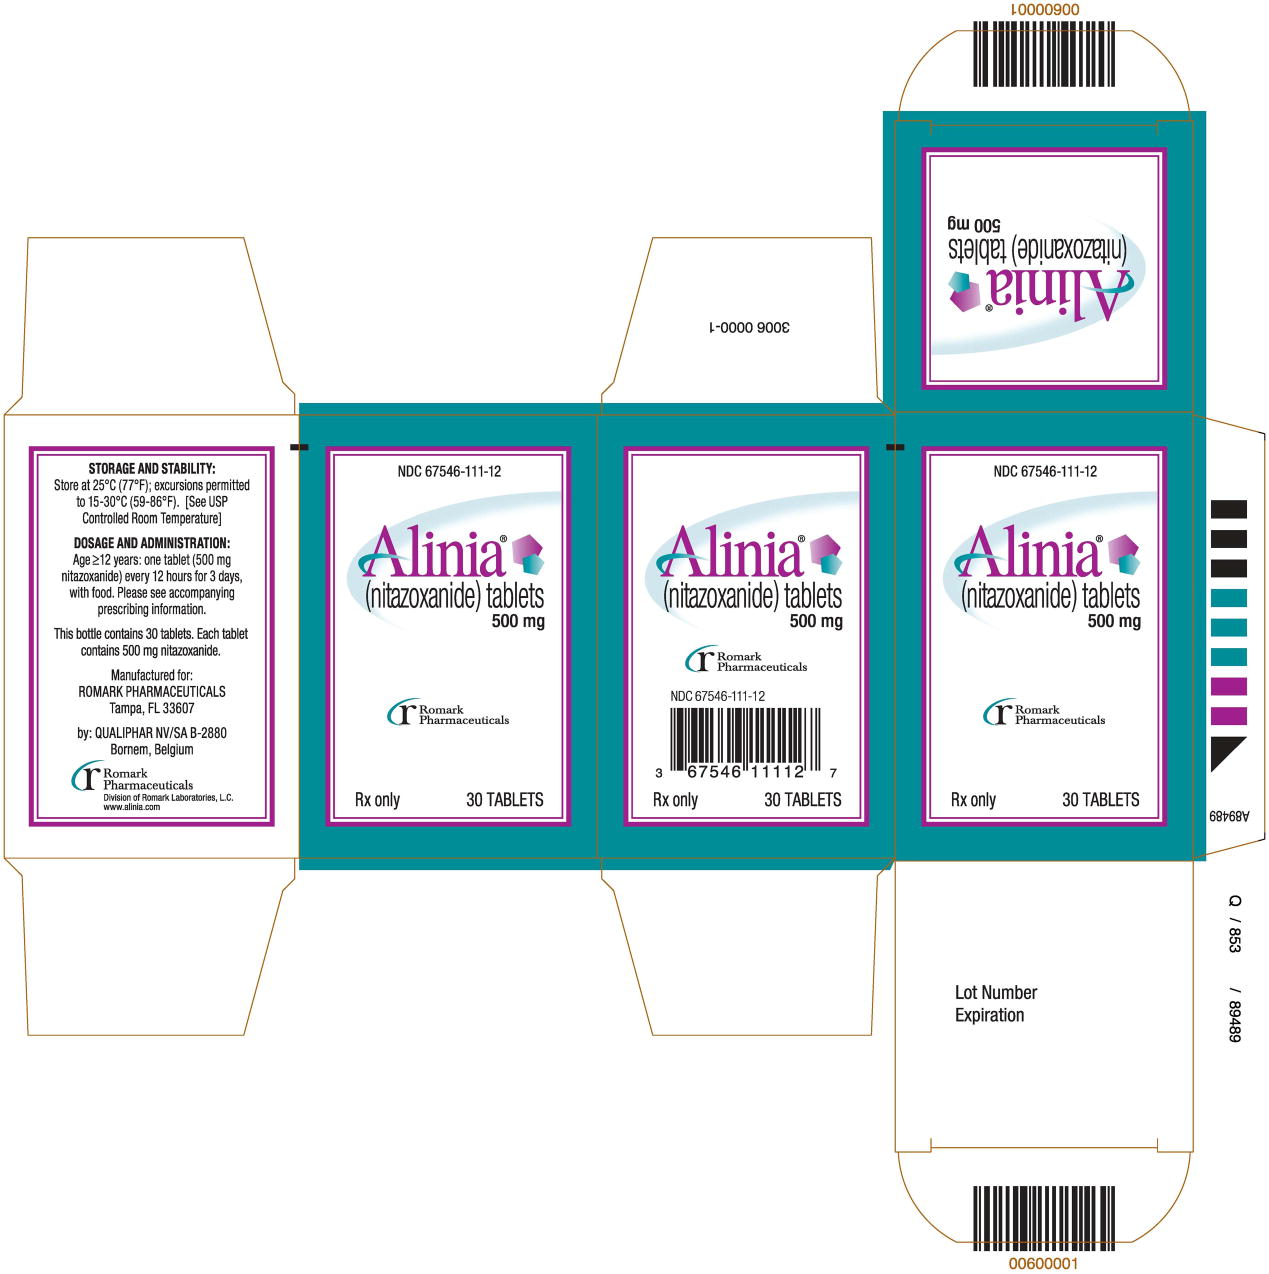 Principal Display Panel - Alinia 500 mg 30 Tablets Carton